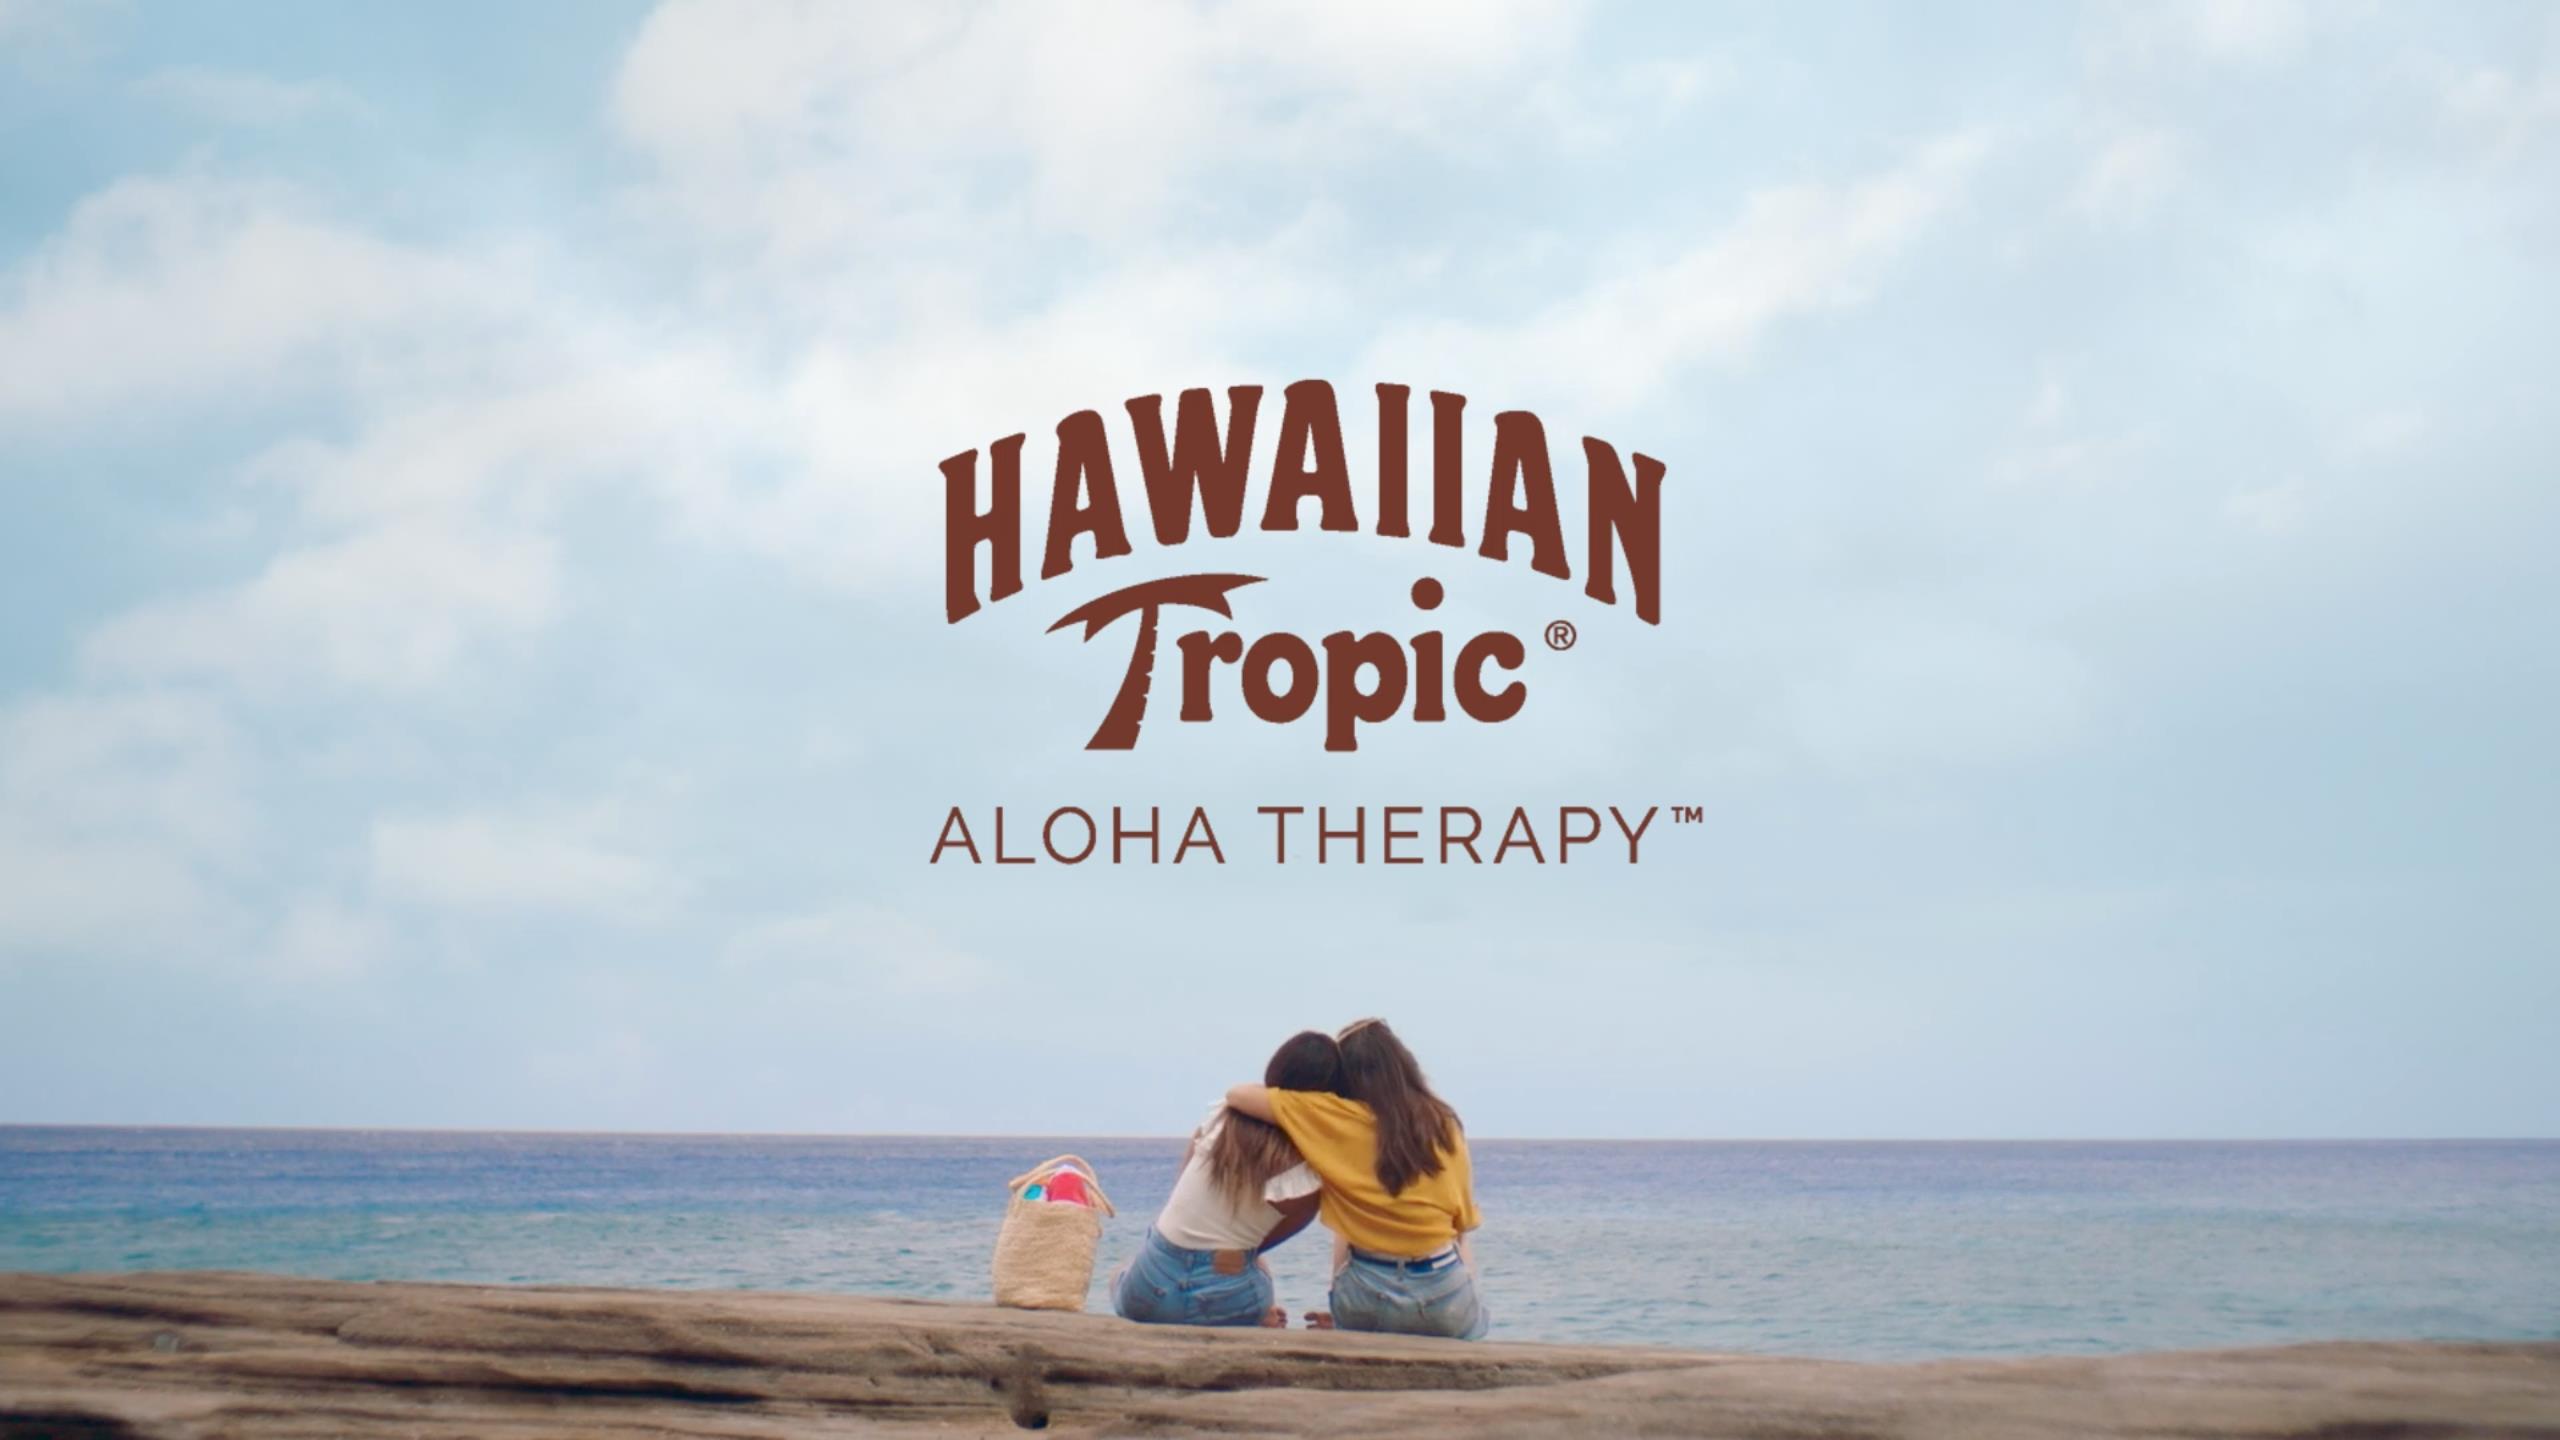 Hawaiian Tropic Aloha Therapy, AntiOxidant Sunscreen Promotion 